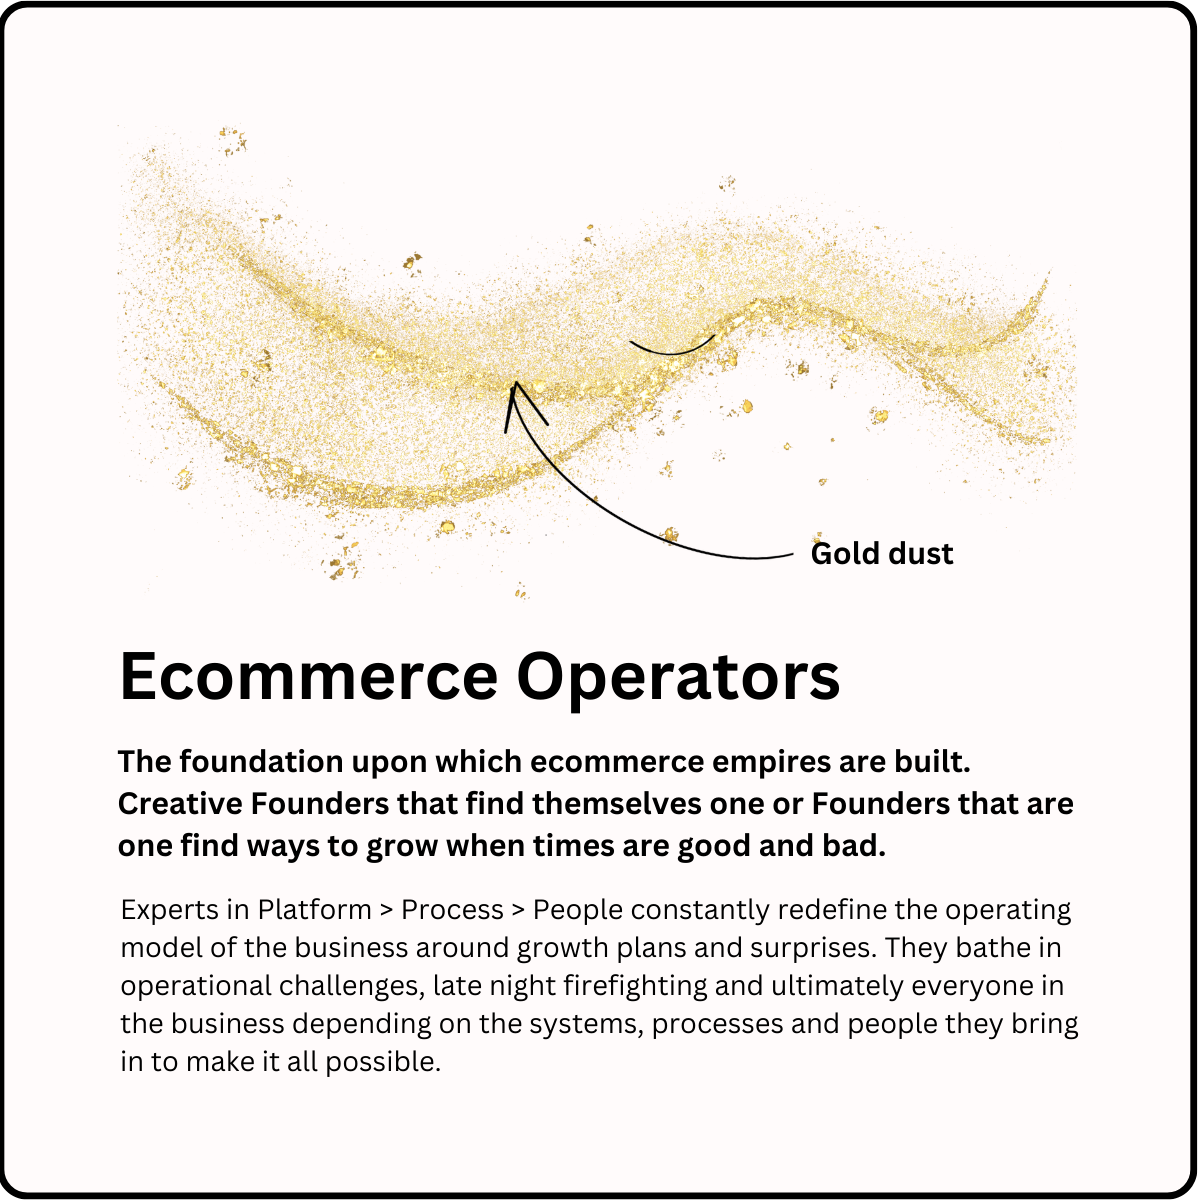 Ecommerce Operators are gold dust.